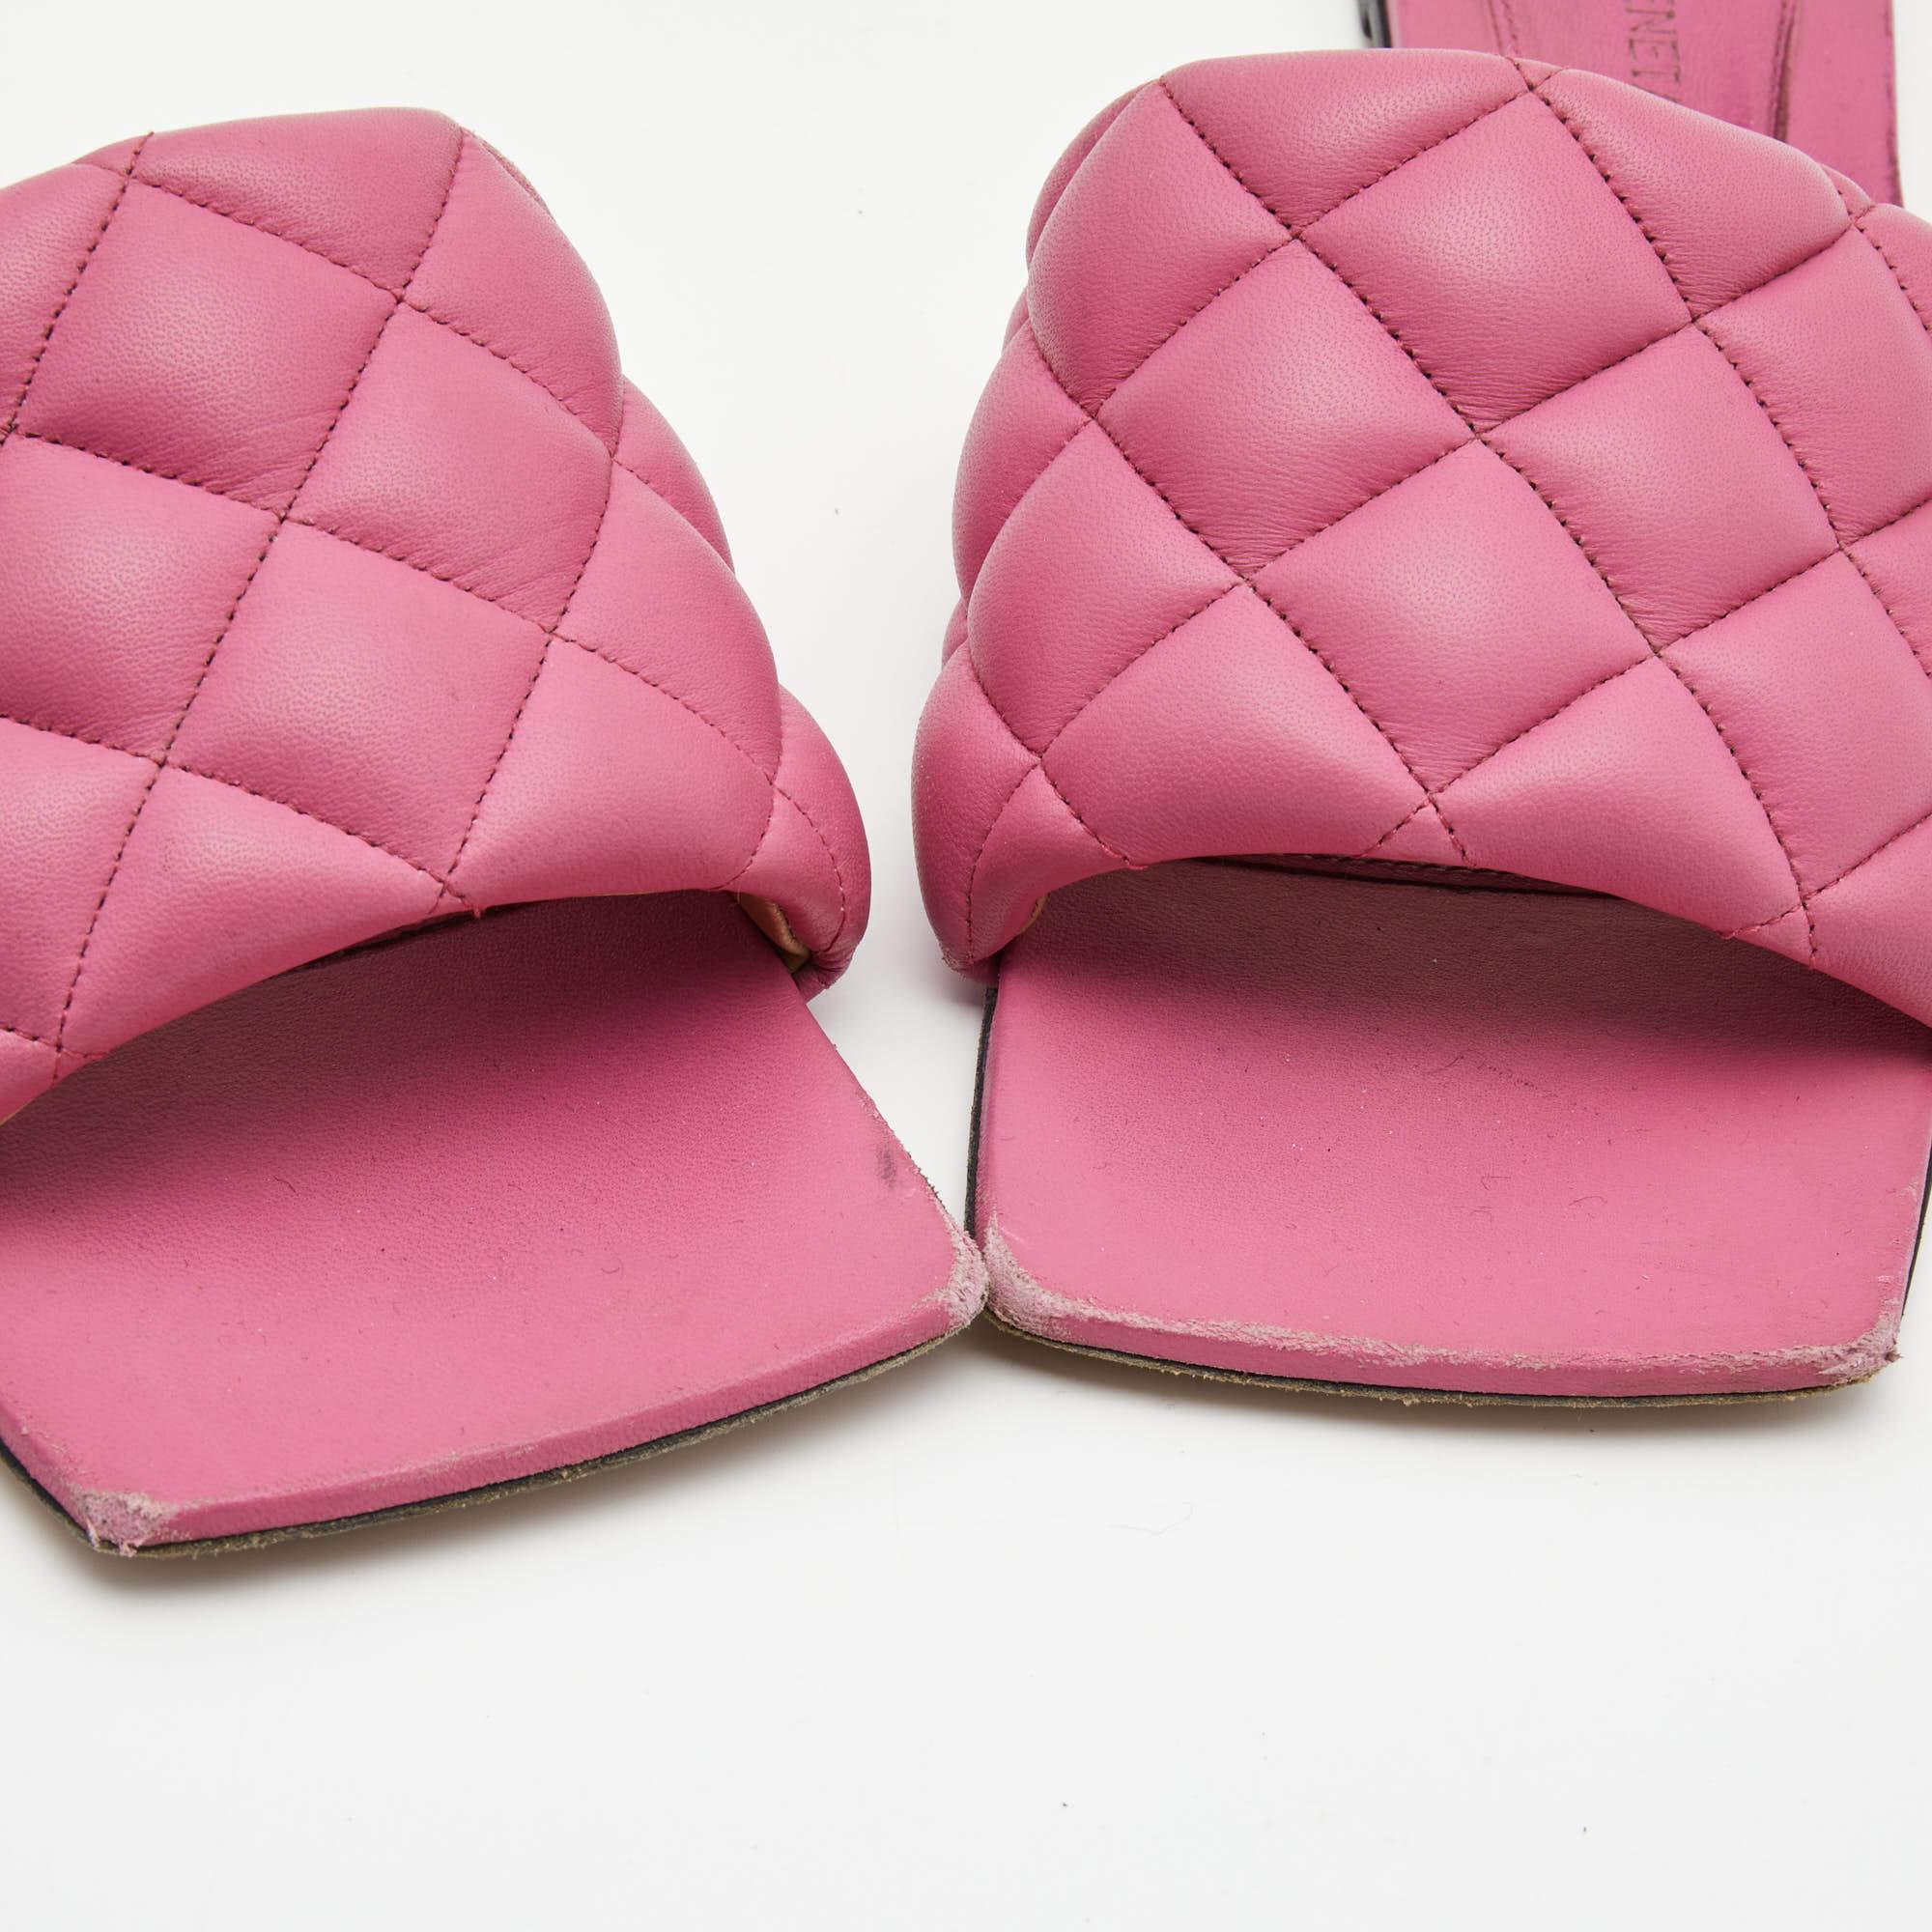 Bottega Veneta Pink Quilted Leather Flat Slides Size 37.5 3